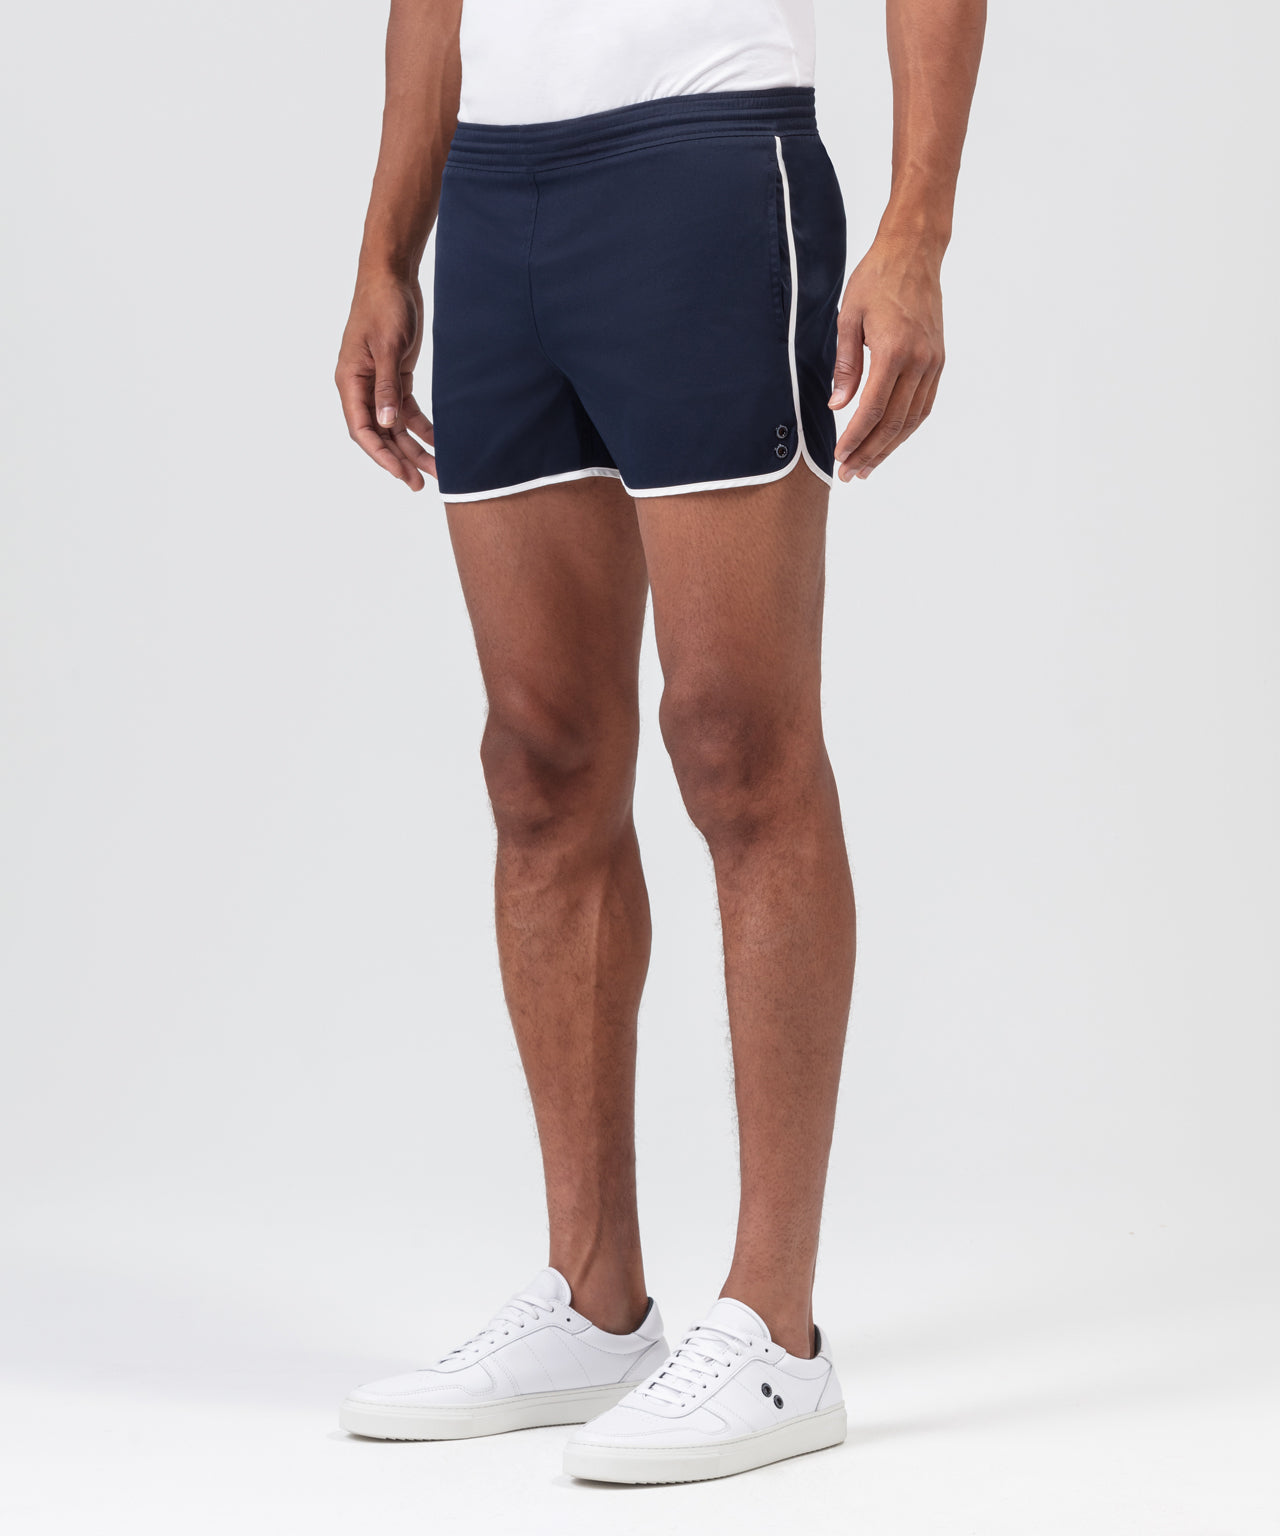 Marathon Exerciser Shorts: Navy